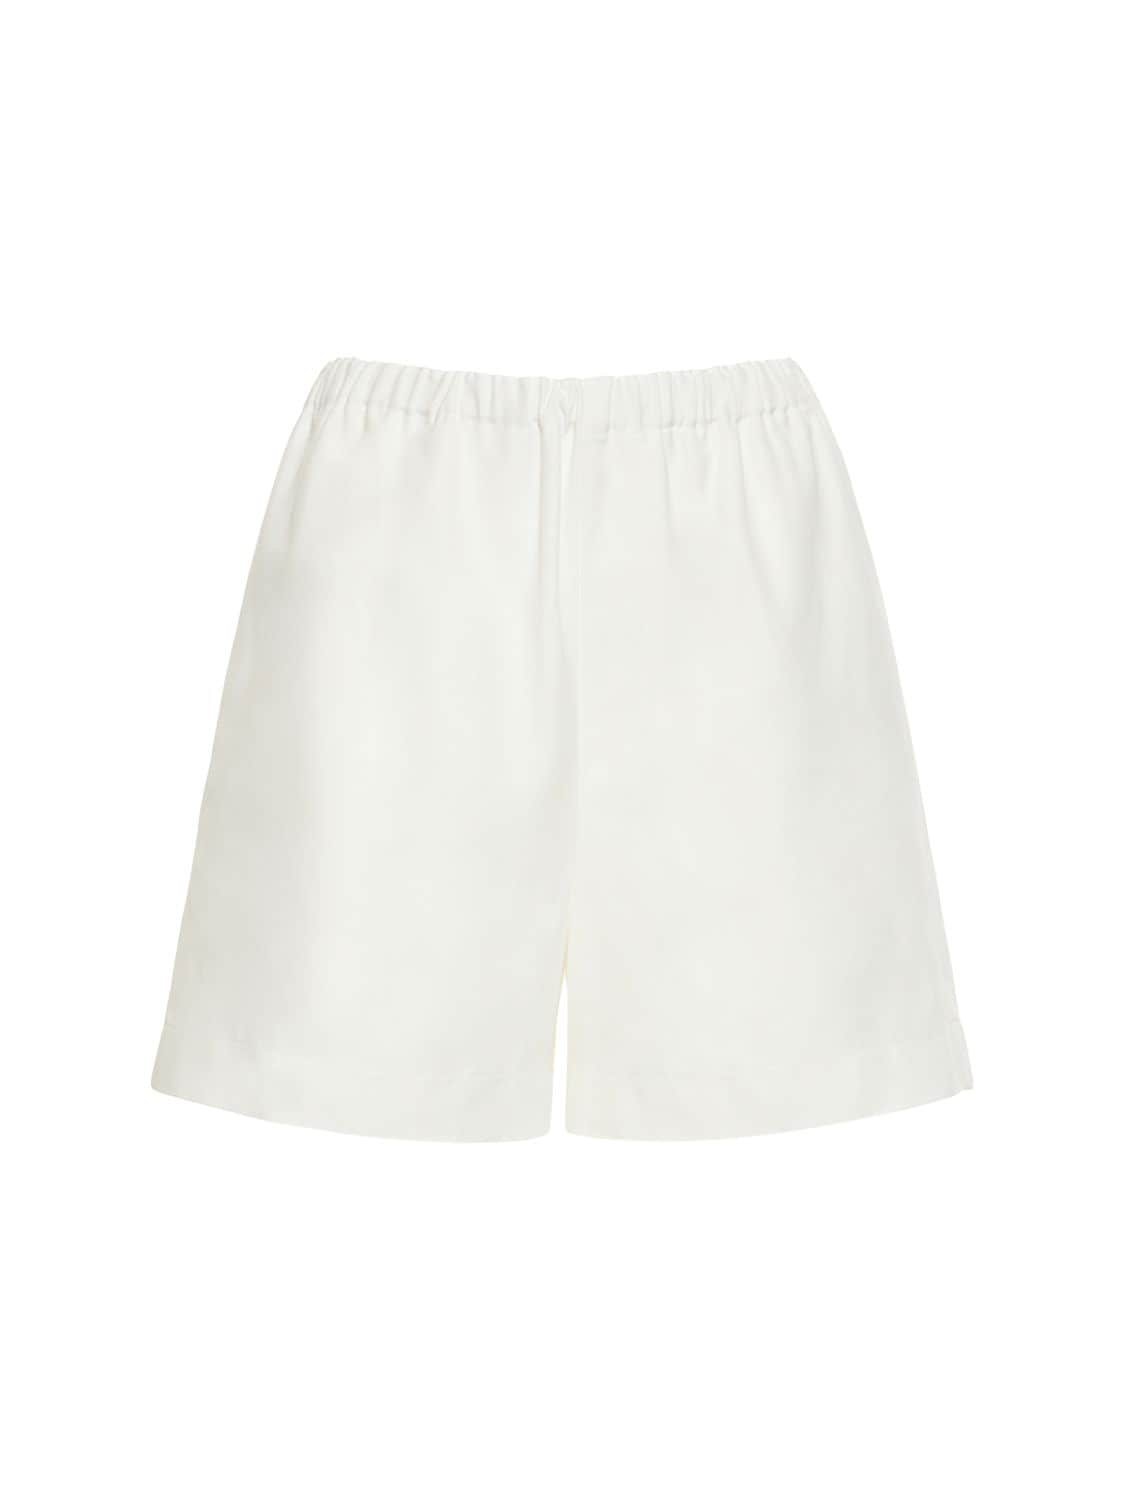 Image of Seto Viscose & Linen Shorts